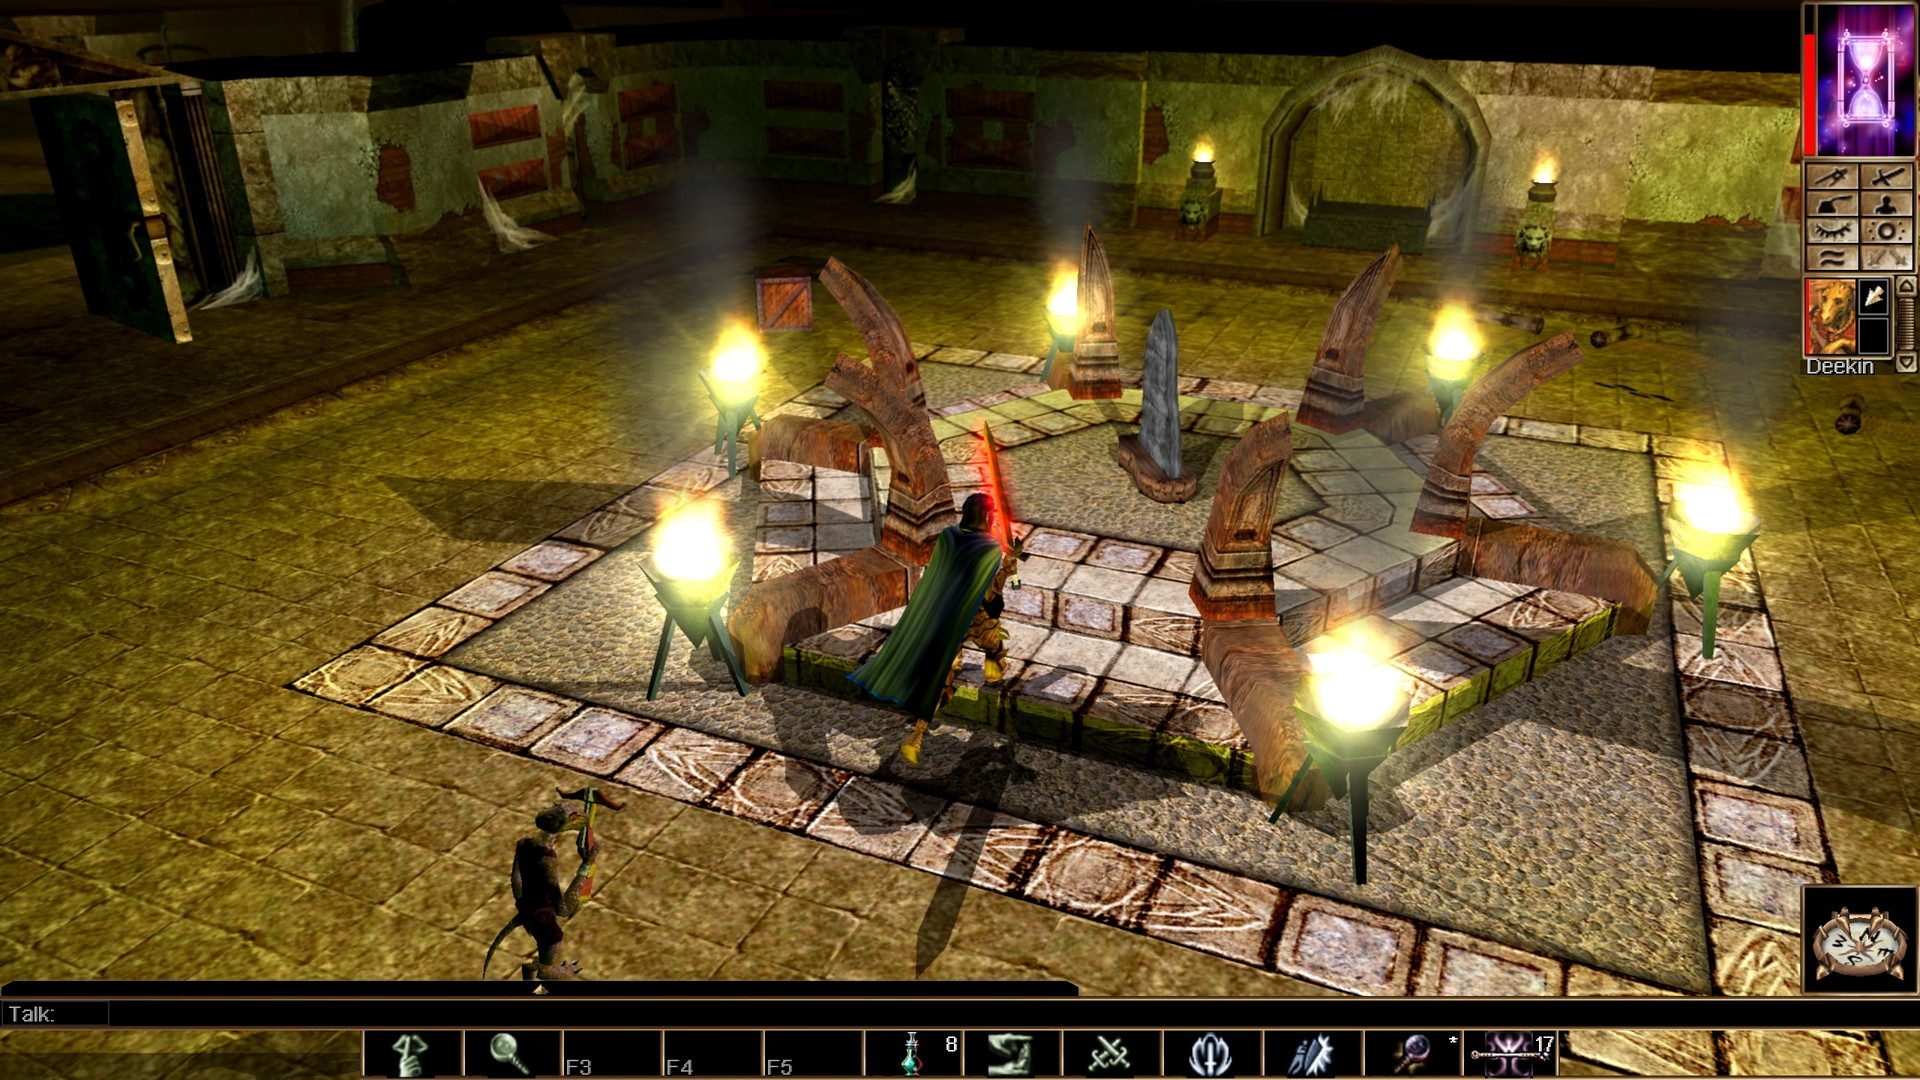 Neverwinter Nights: Enhanced Edition (Voucher - Kód na stiahnutie) (PC)